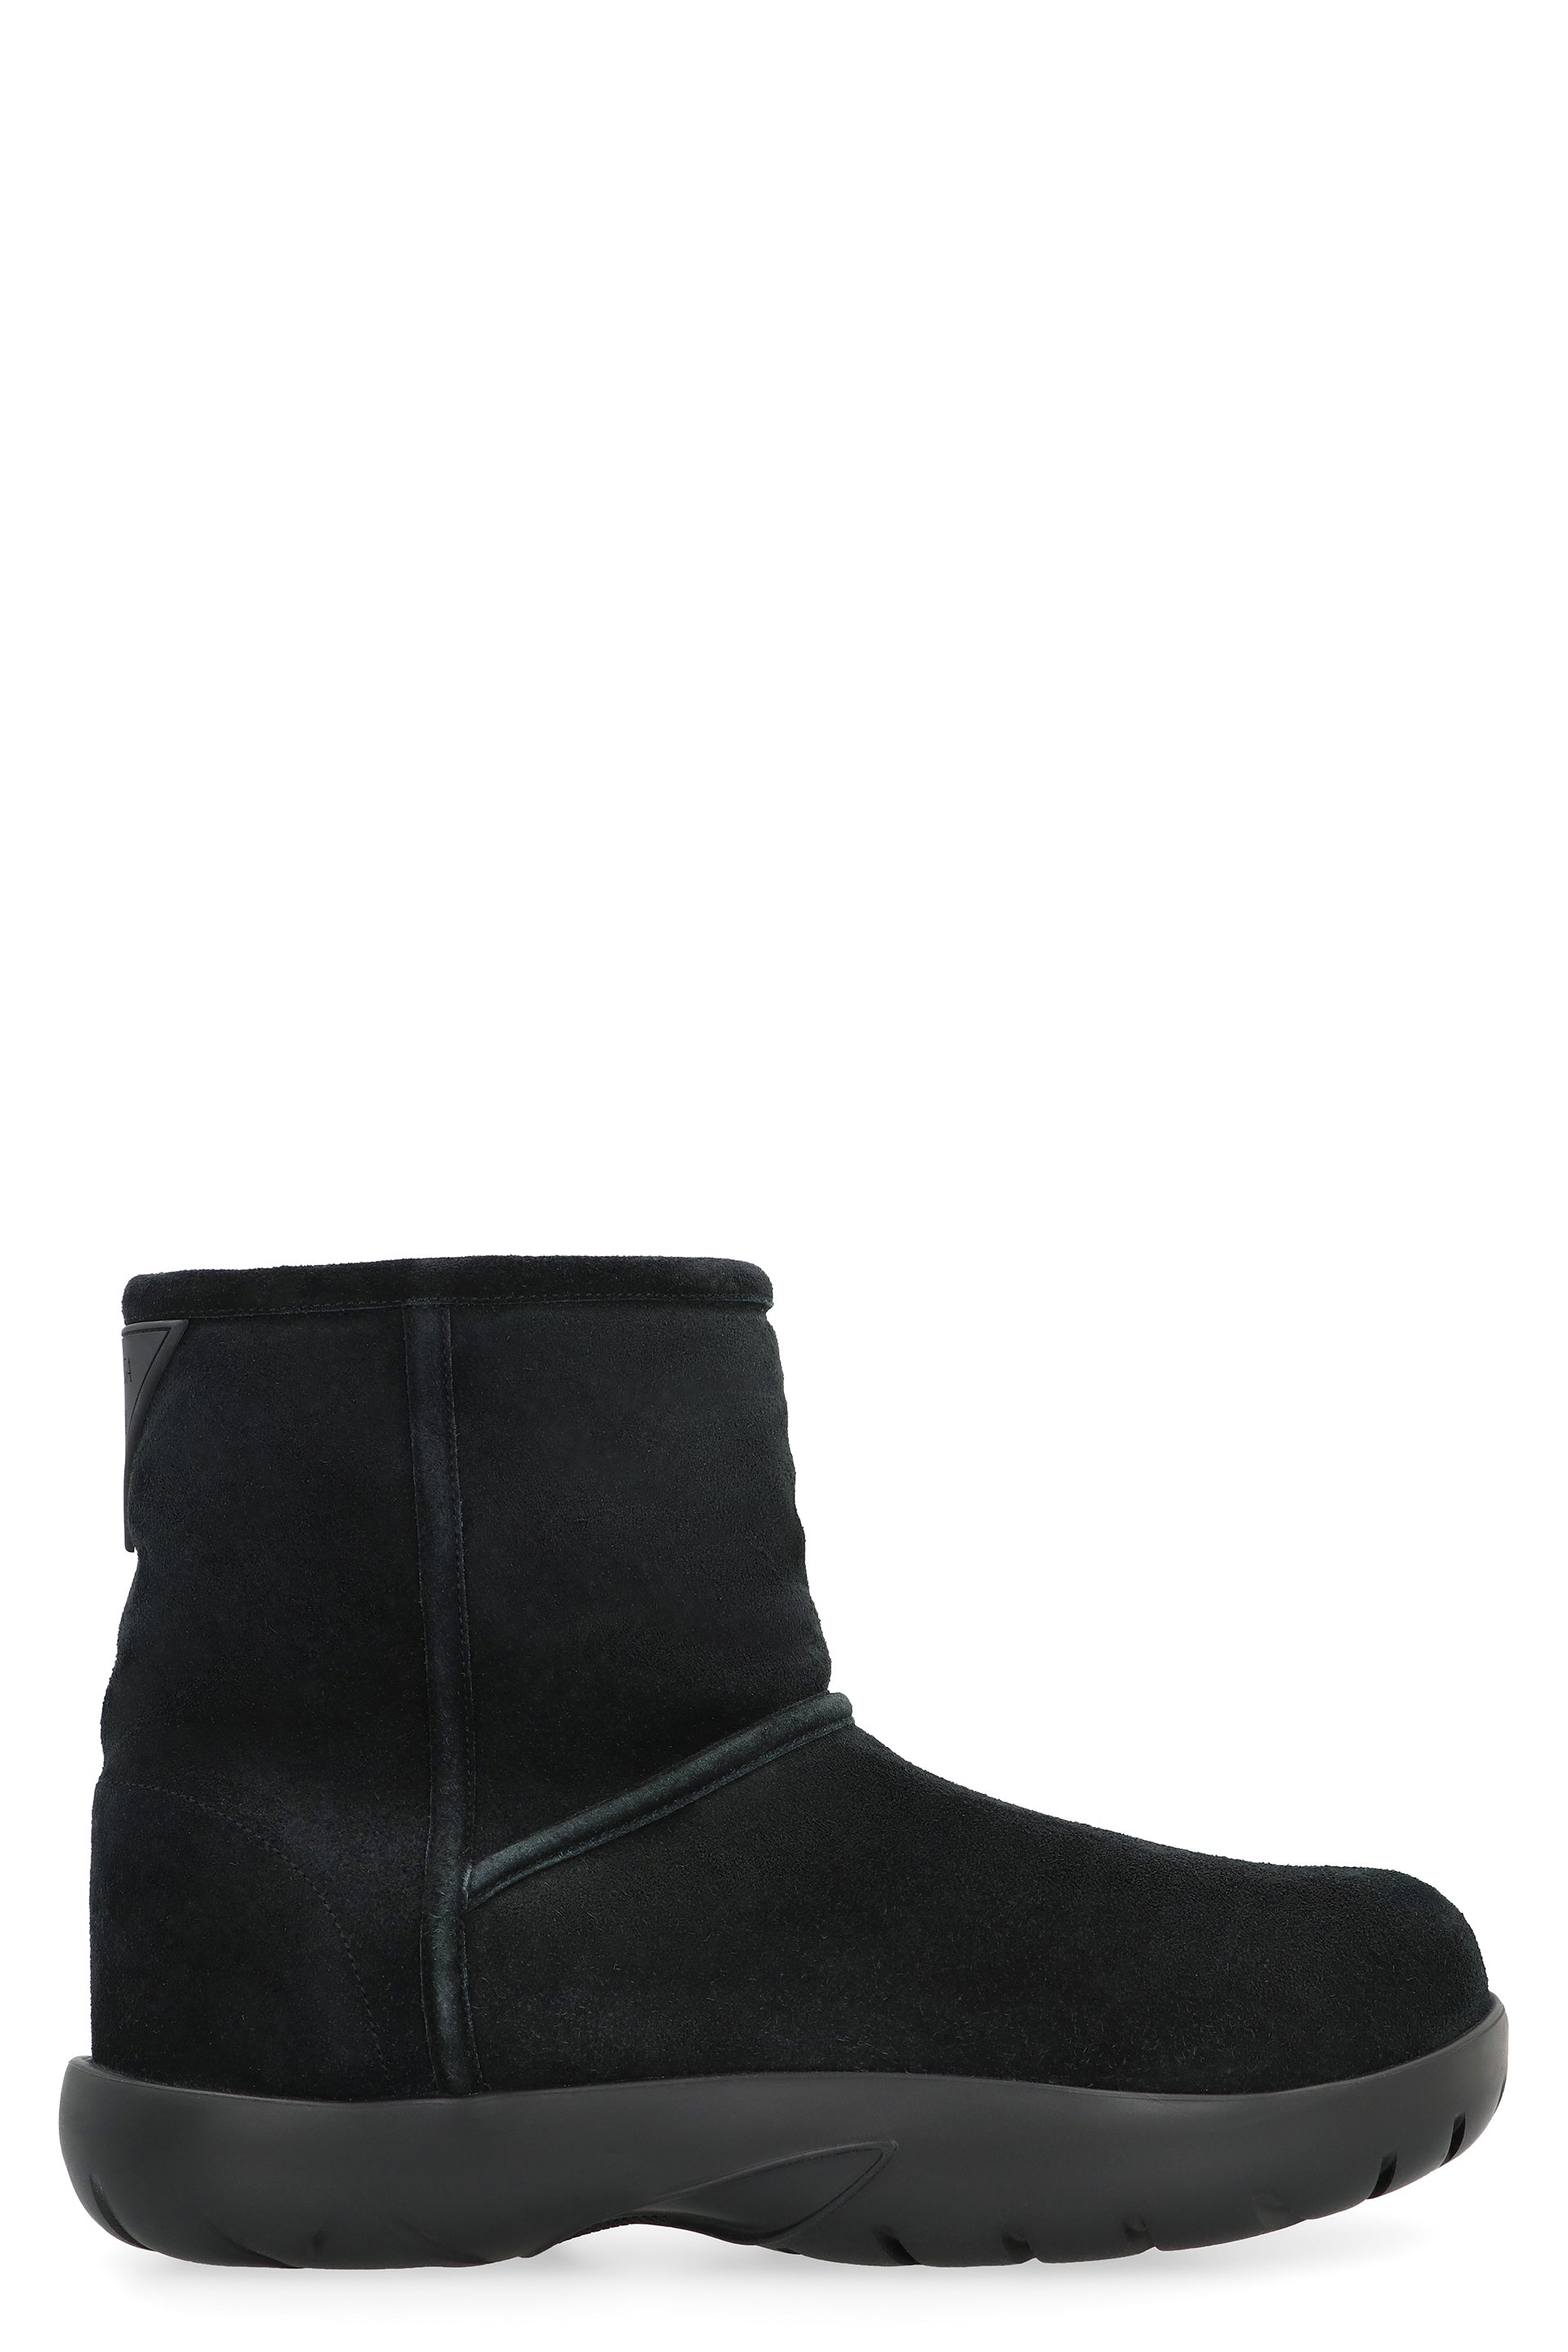 Bottega Veneta Men's Black Suede Ankle Boots For Fw23